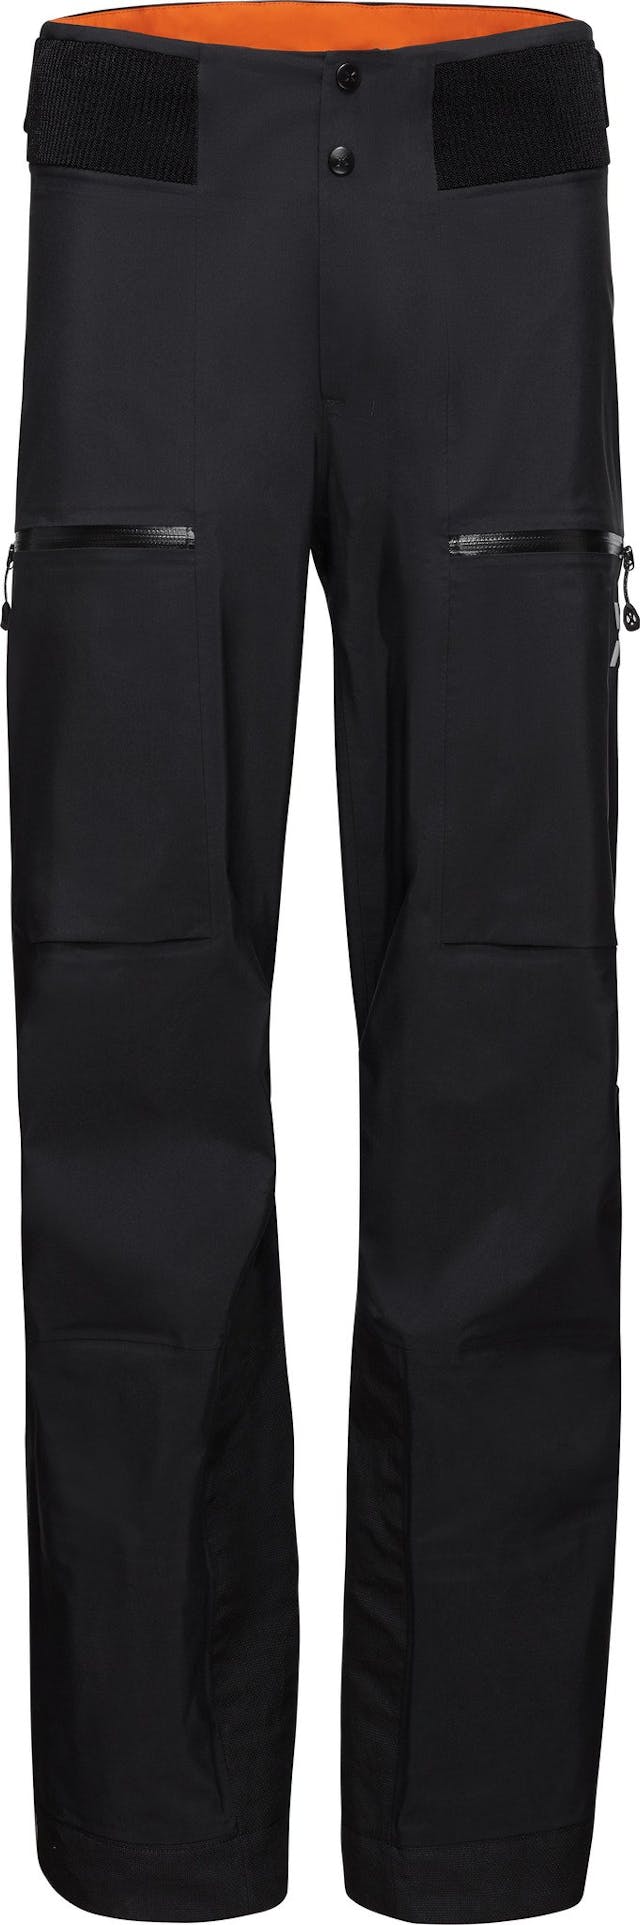 Product image for Eiger Free Advanced Hardshell Pants - Men's